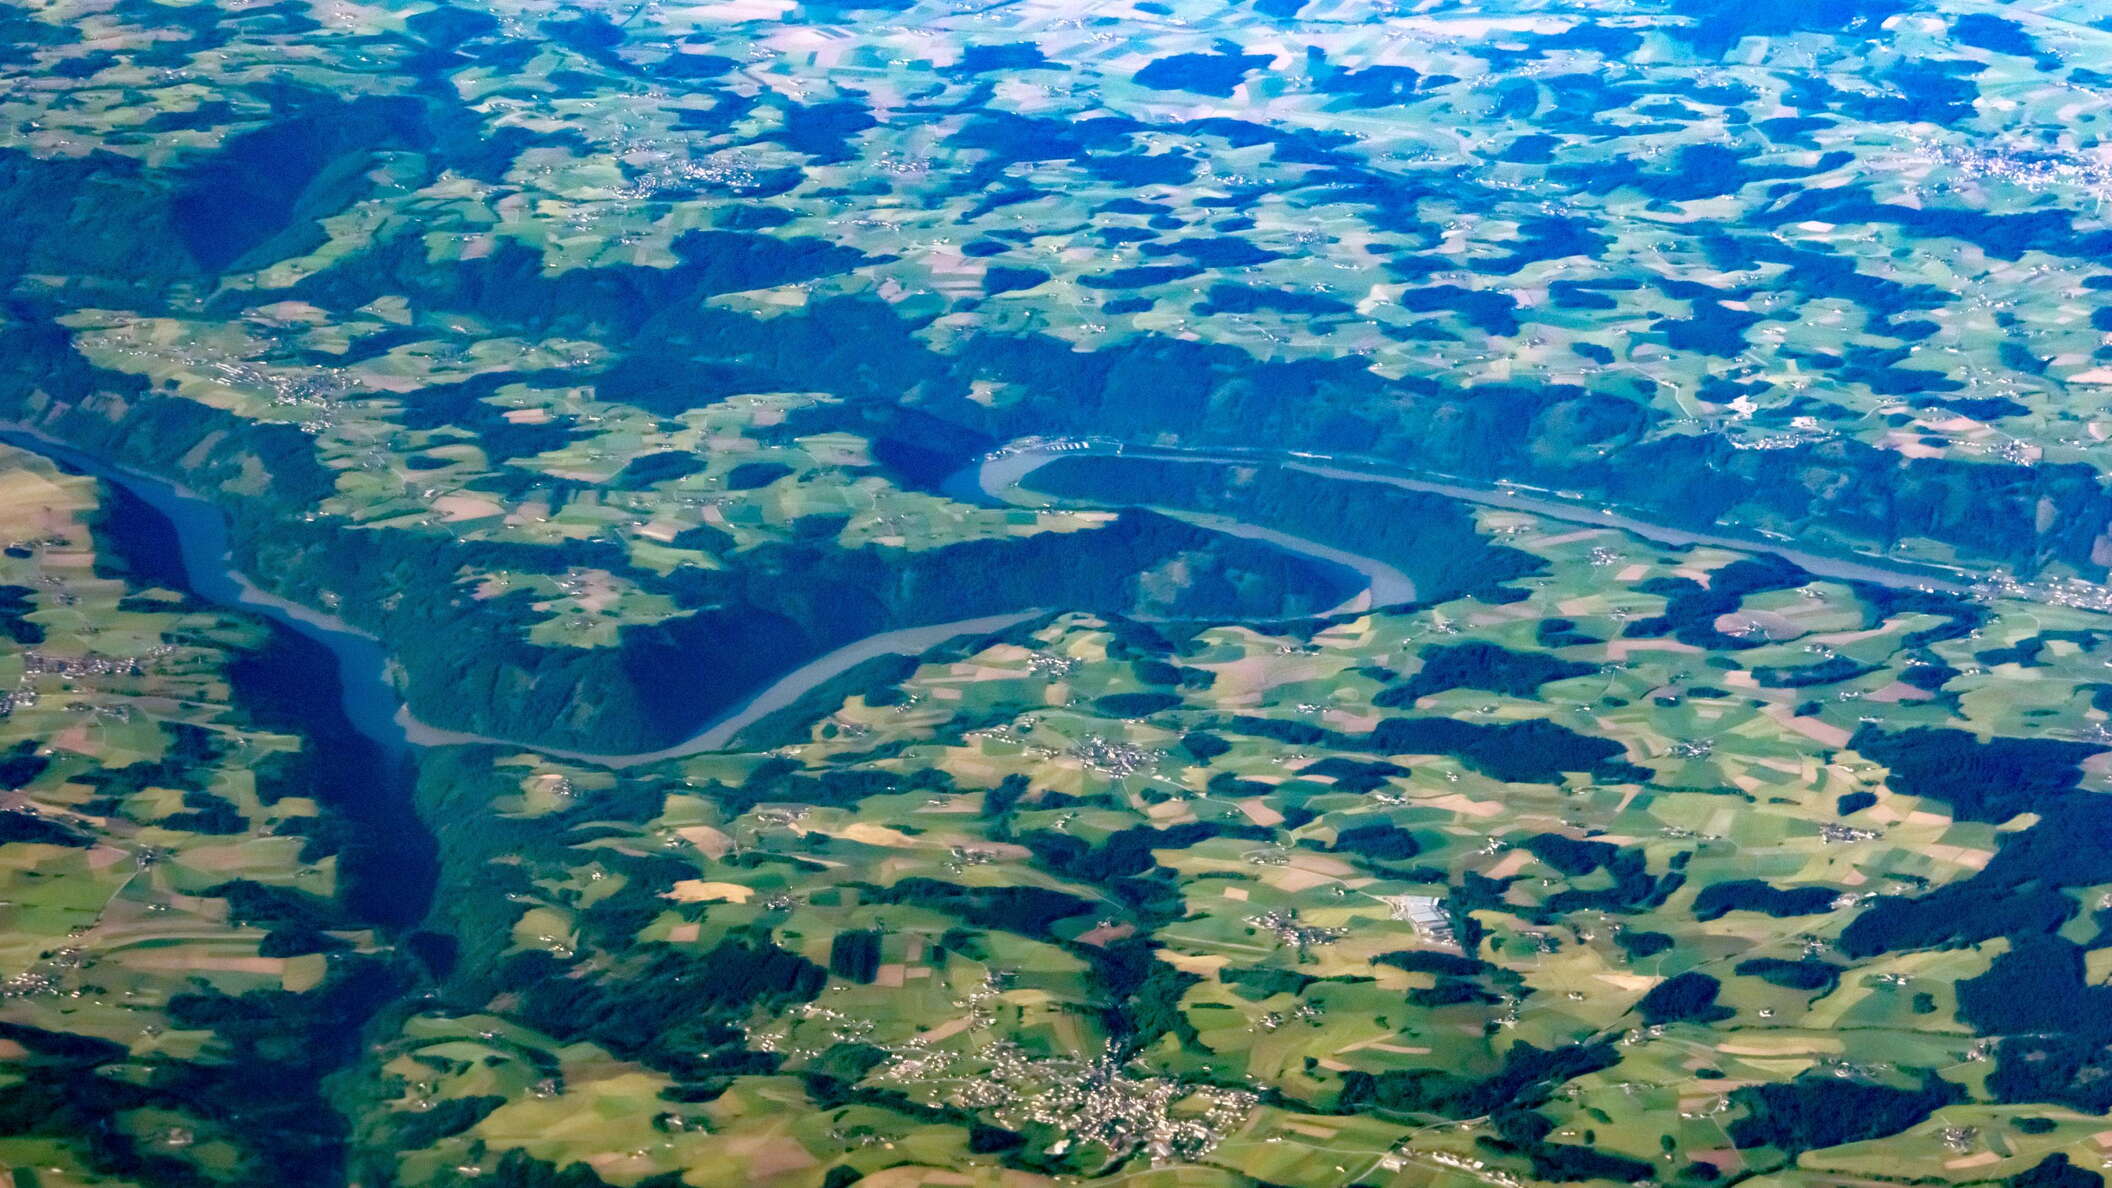 Danube Valley with Schlögener Schlinge